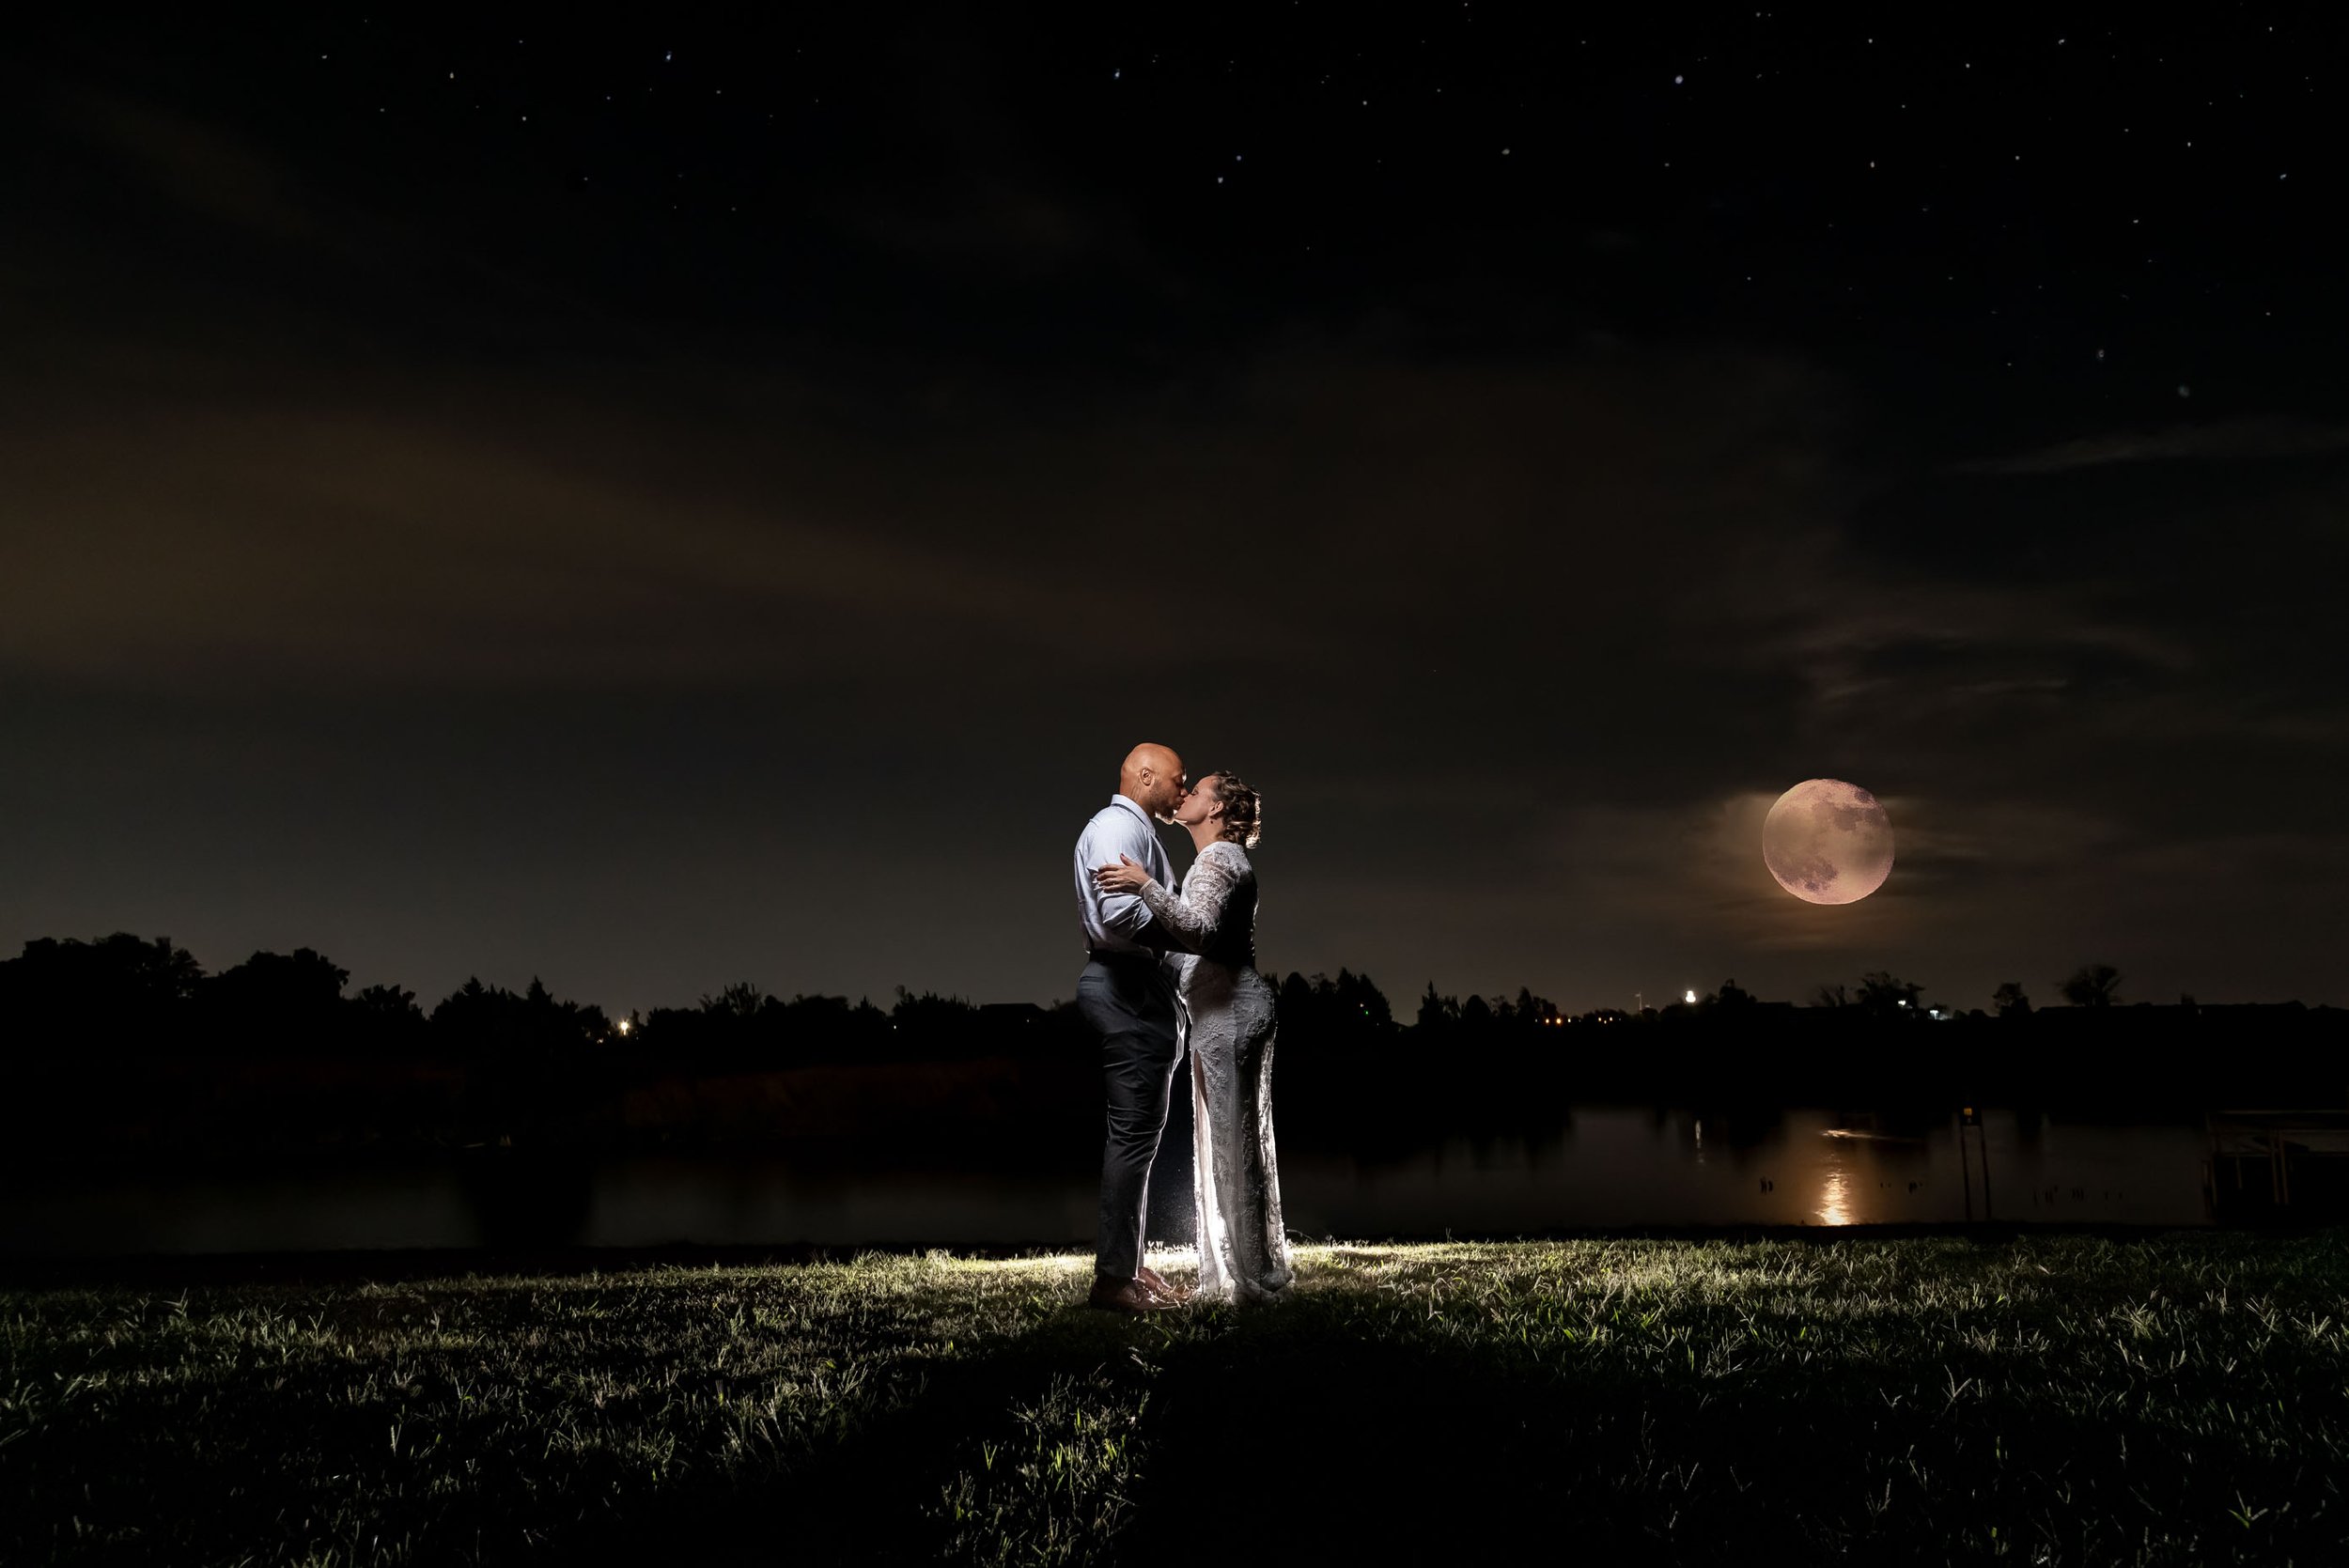 wedding-photographer-photography-okc-edmond-oklahoma-city-beautiful-bride-groom-night-portrait-pond-lake-moon-chadandbriephotography.jpg